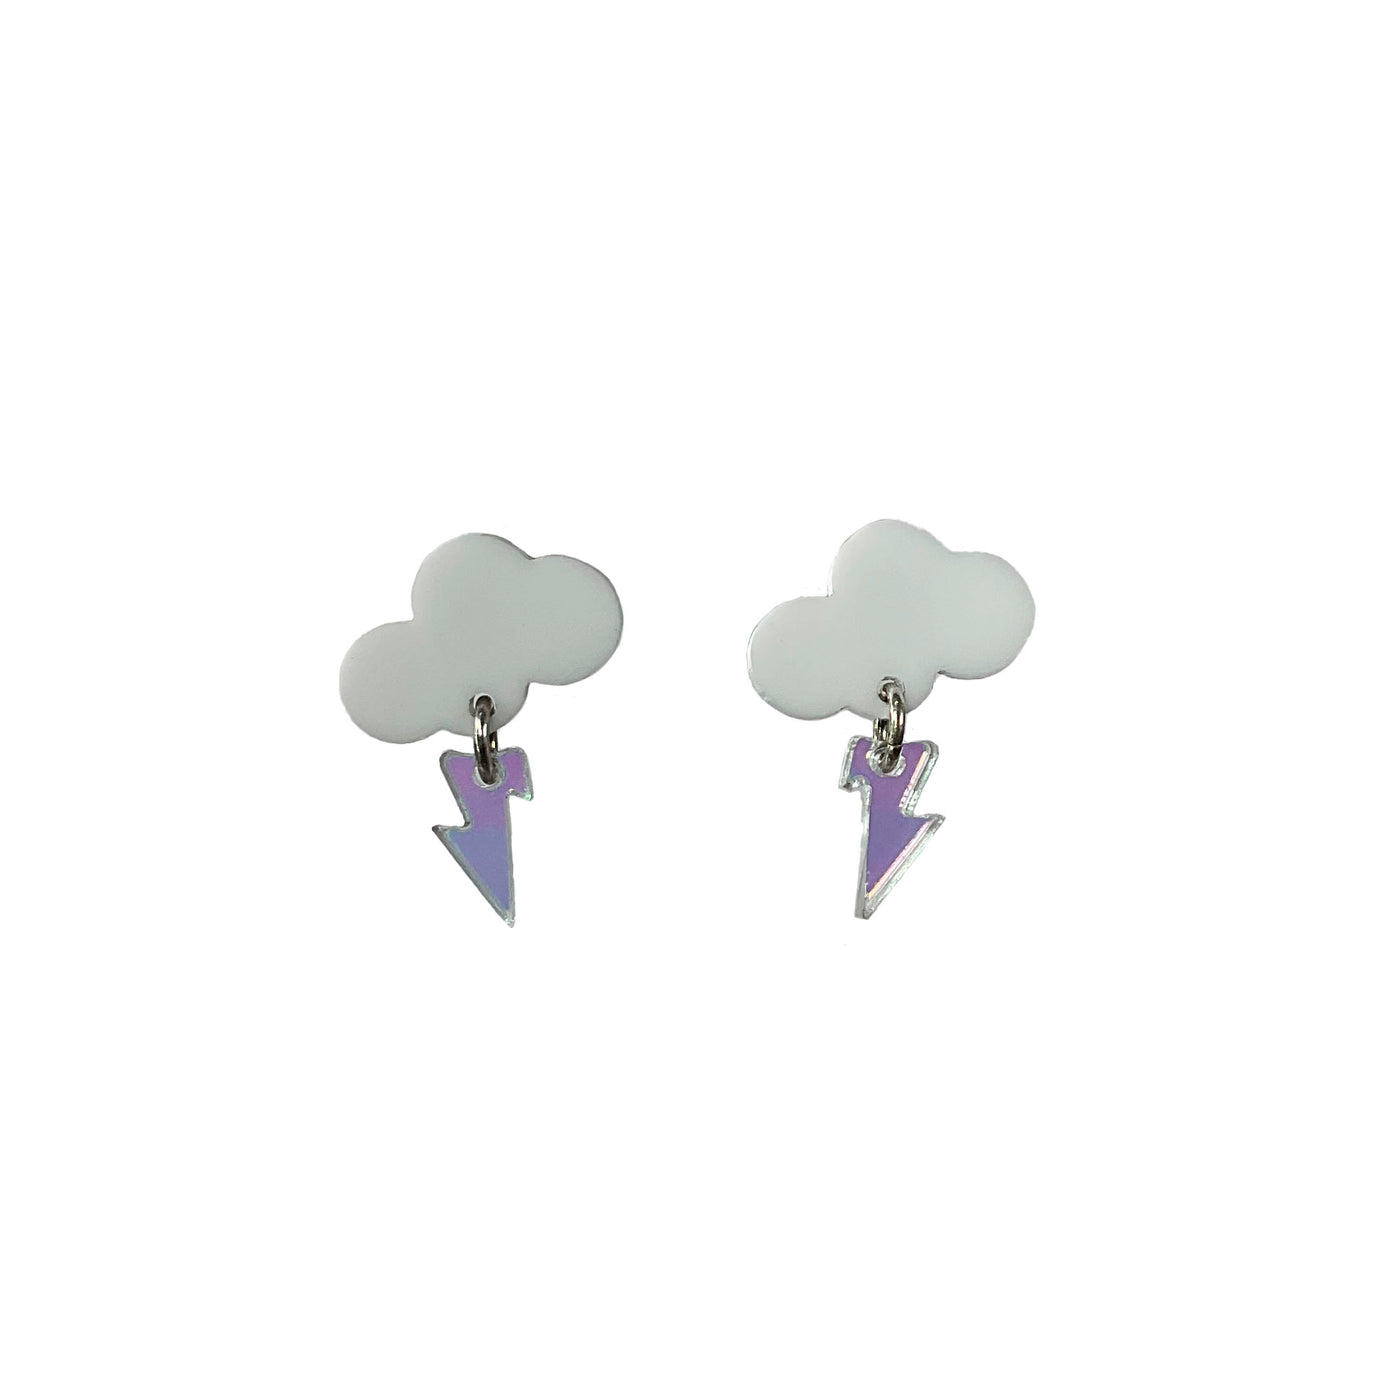 Baby Rain Cloud Earrings - White/Iridescent